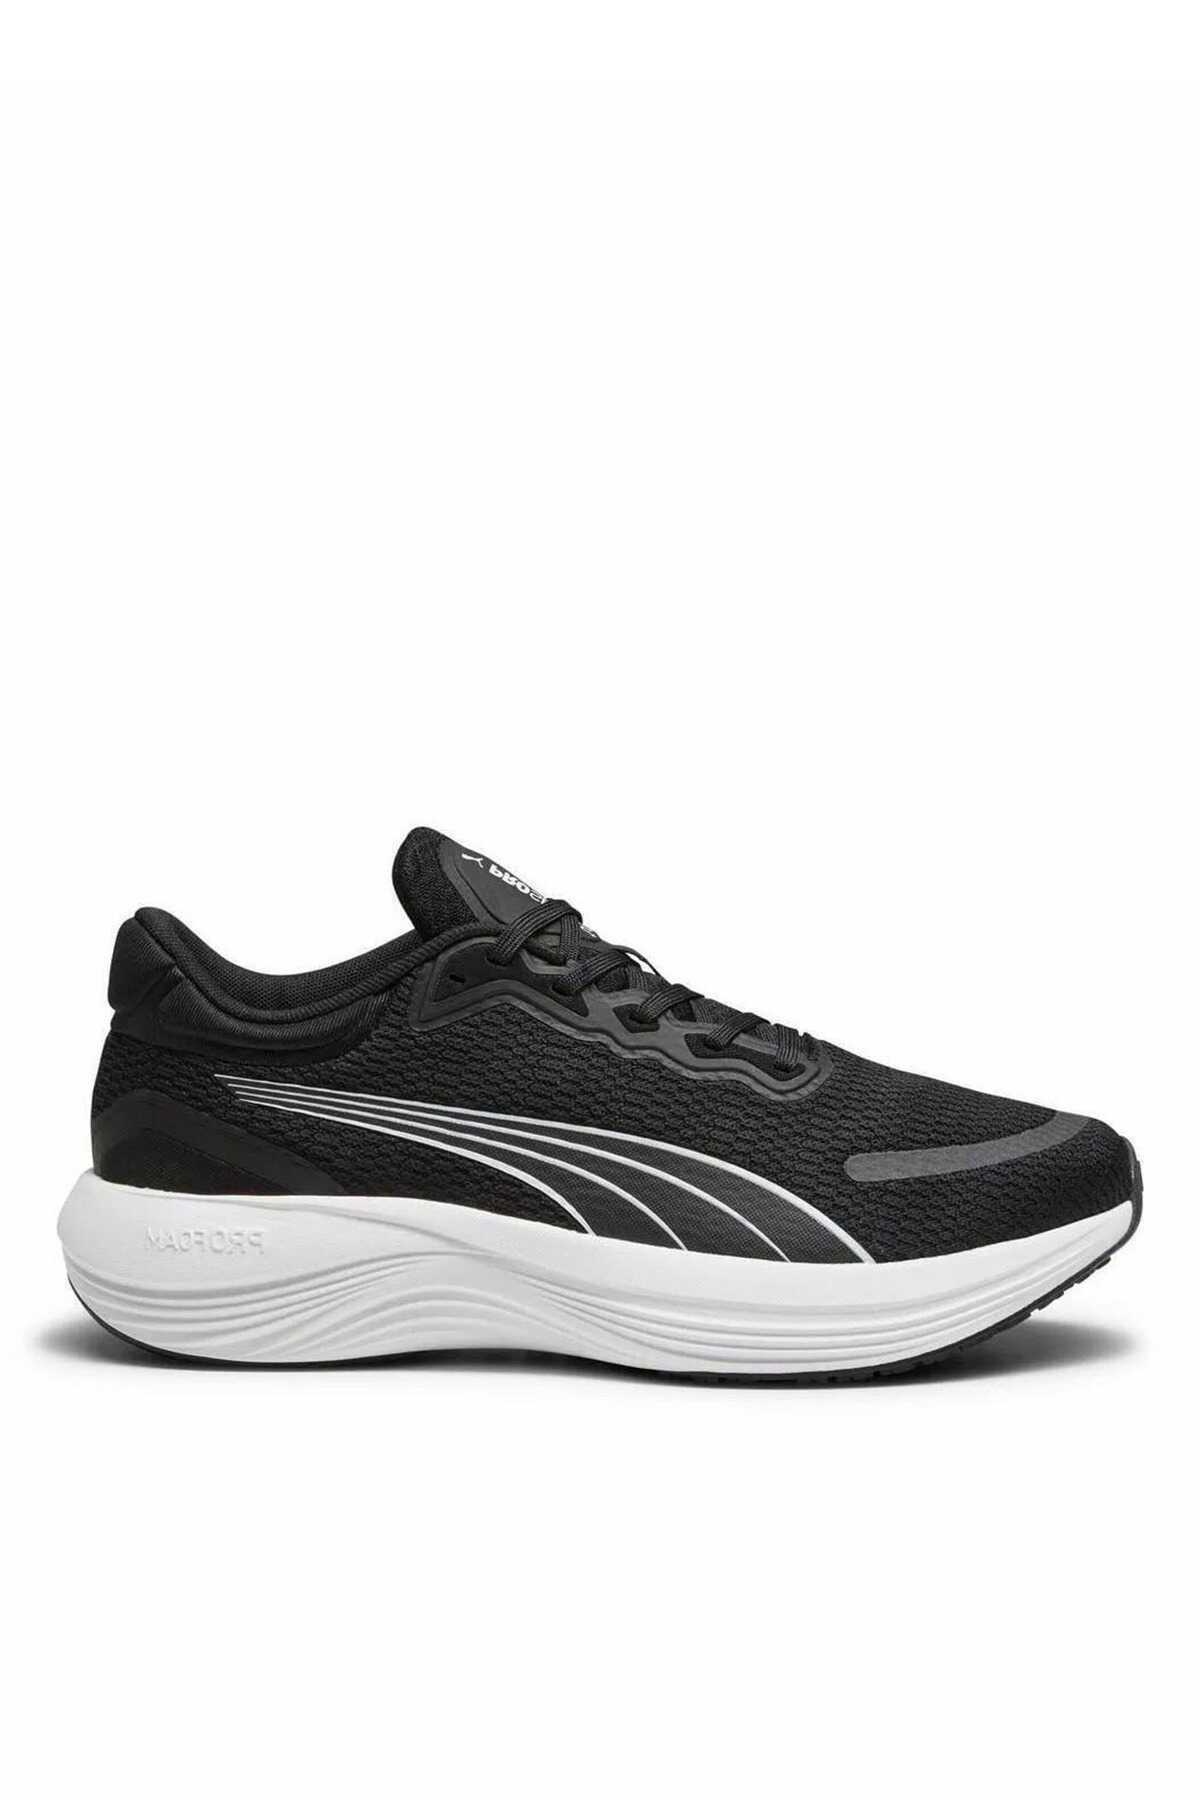 Puma - Puma Scend Pro Erkek Sneaker Ayakkabı Siyah / Beyaz